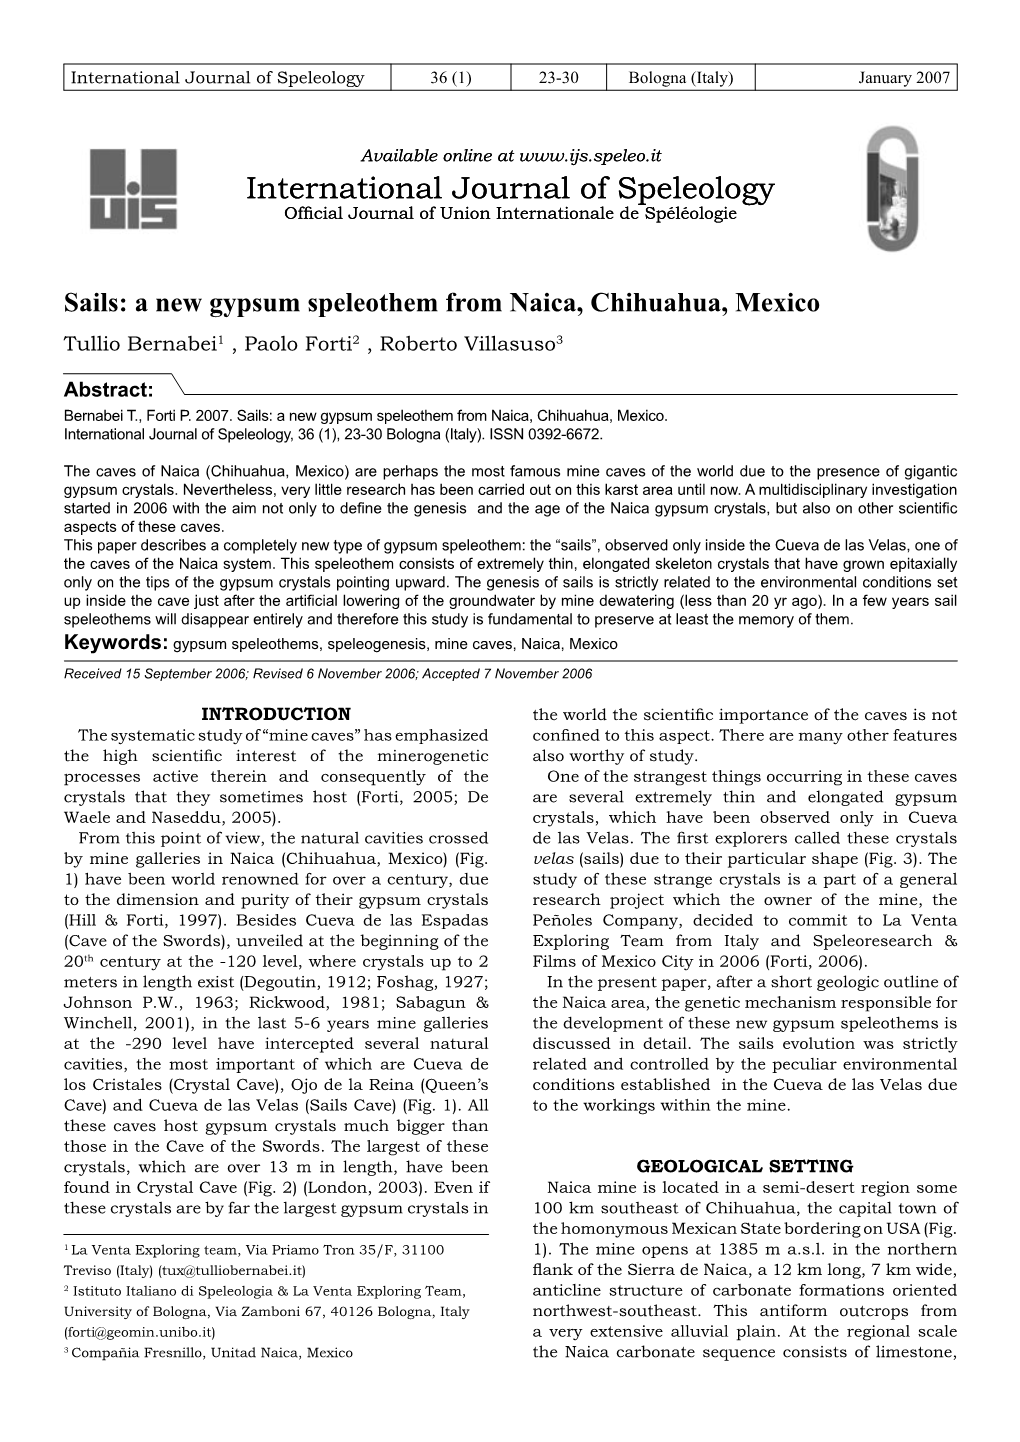 A New Gypsum Speleothem from Naica, Chihuahua, Mexico Tullio Bernabei1 , Paolo Forti2 , Roberto Villasuso3